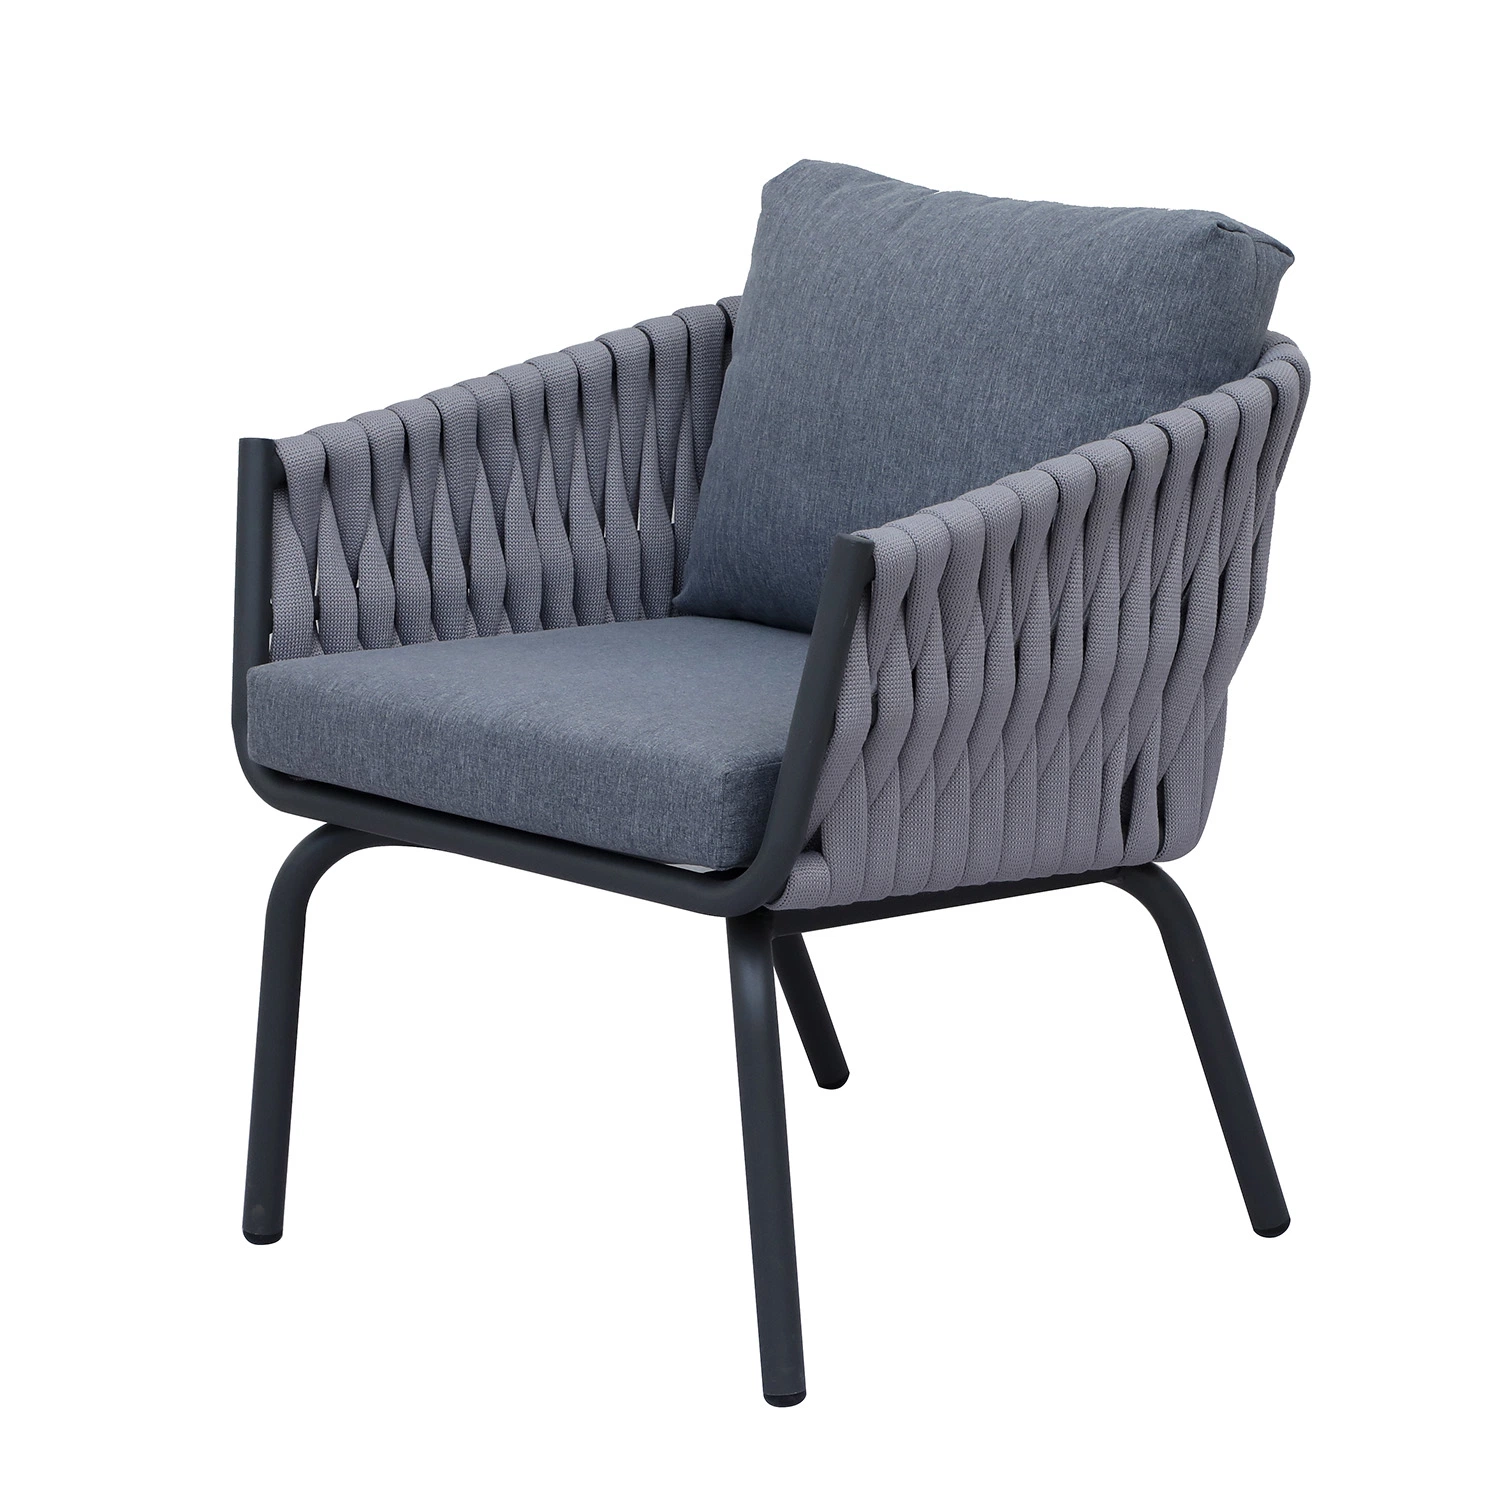 Modern Outdoor Garden Patio Hotel Leisure Aluminium Sofa Lounger Chair Furniture